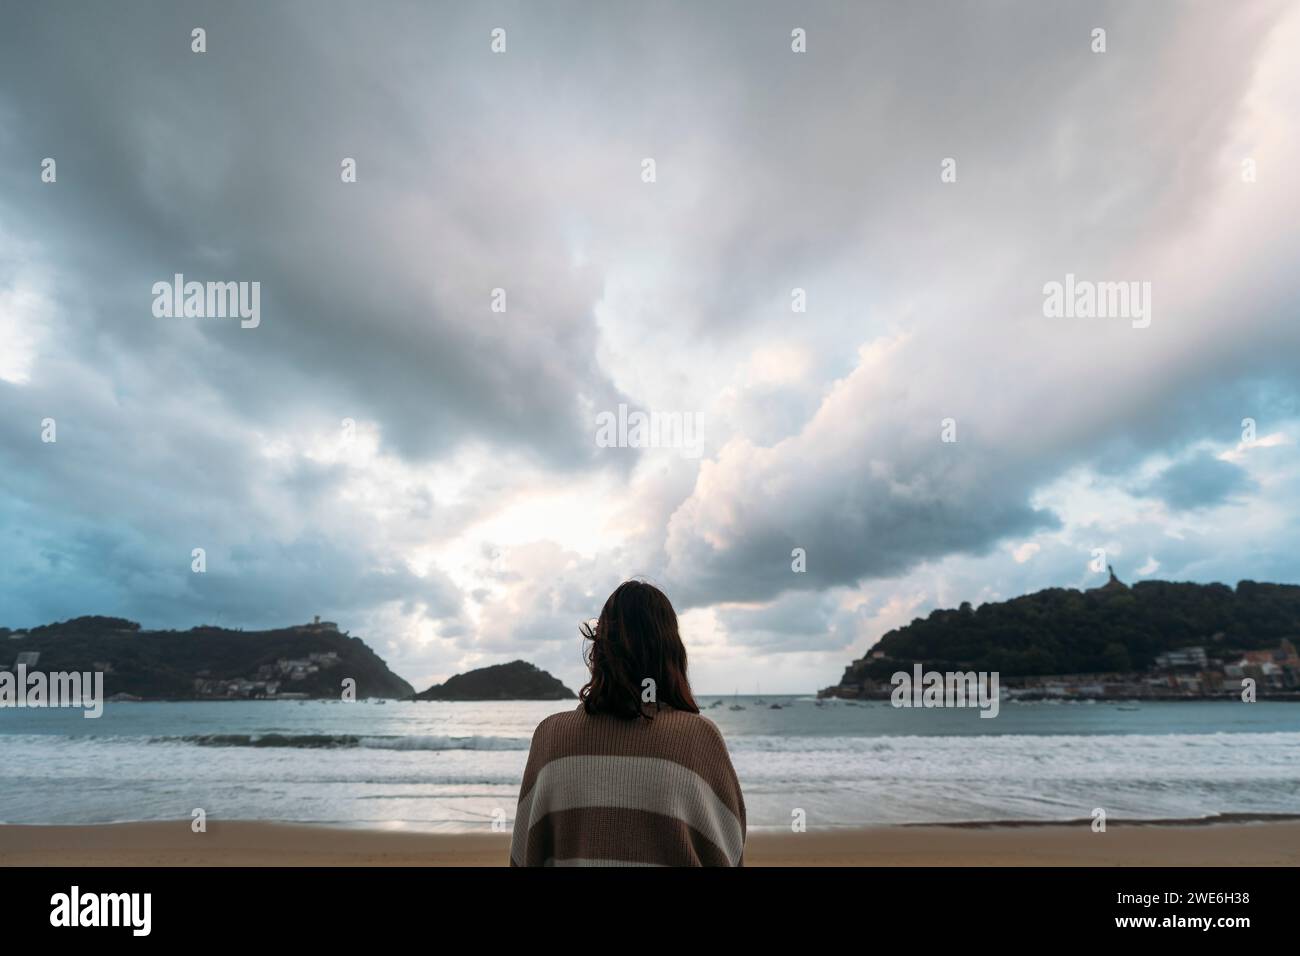 Young woman at Playa de la Concha under cloudy sky Stock Photo